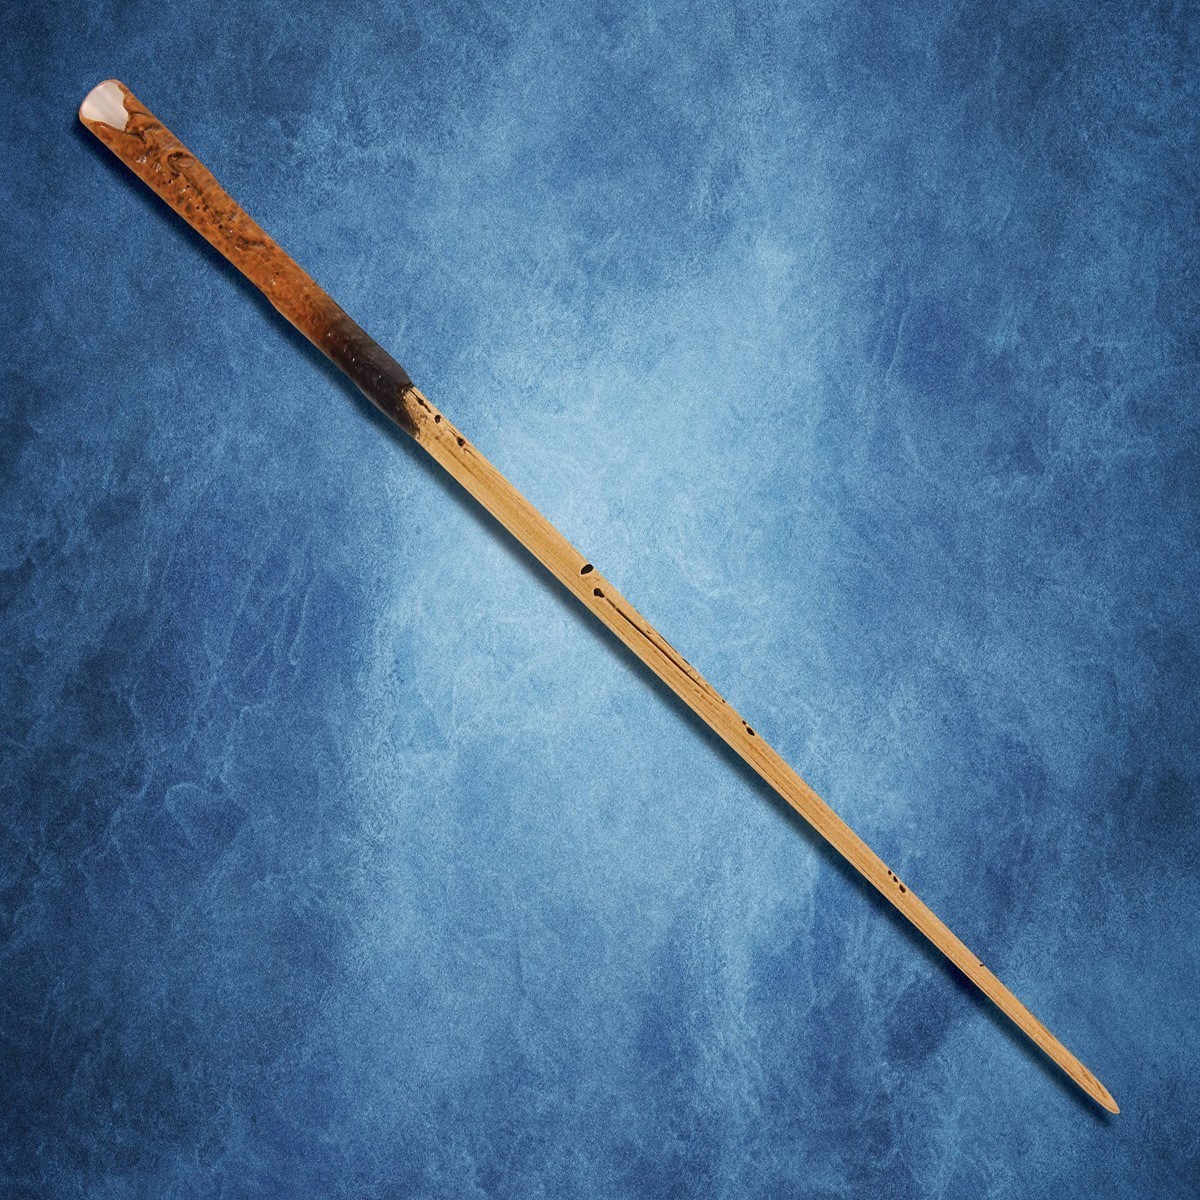 Newt Scamander's Magic wand